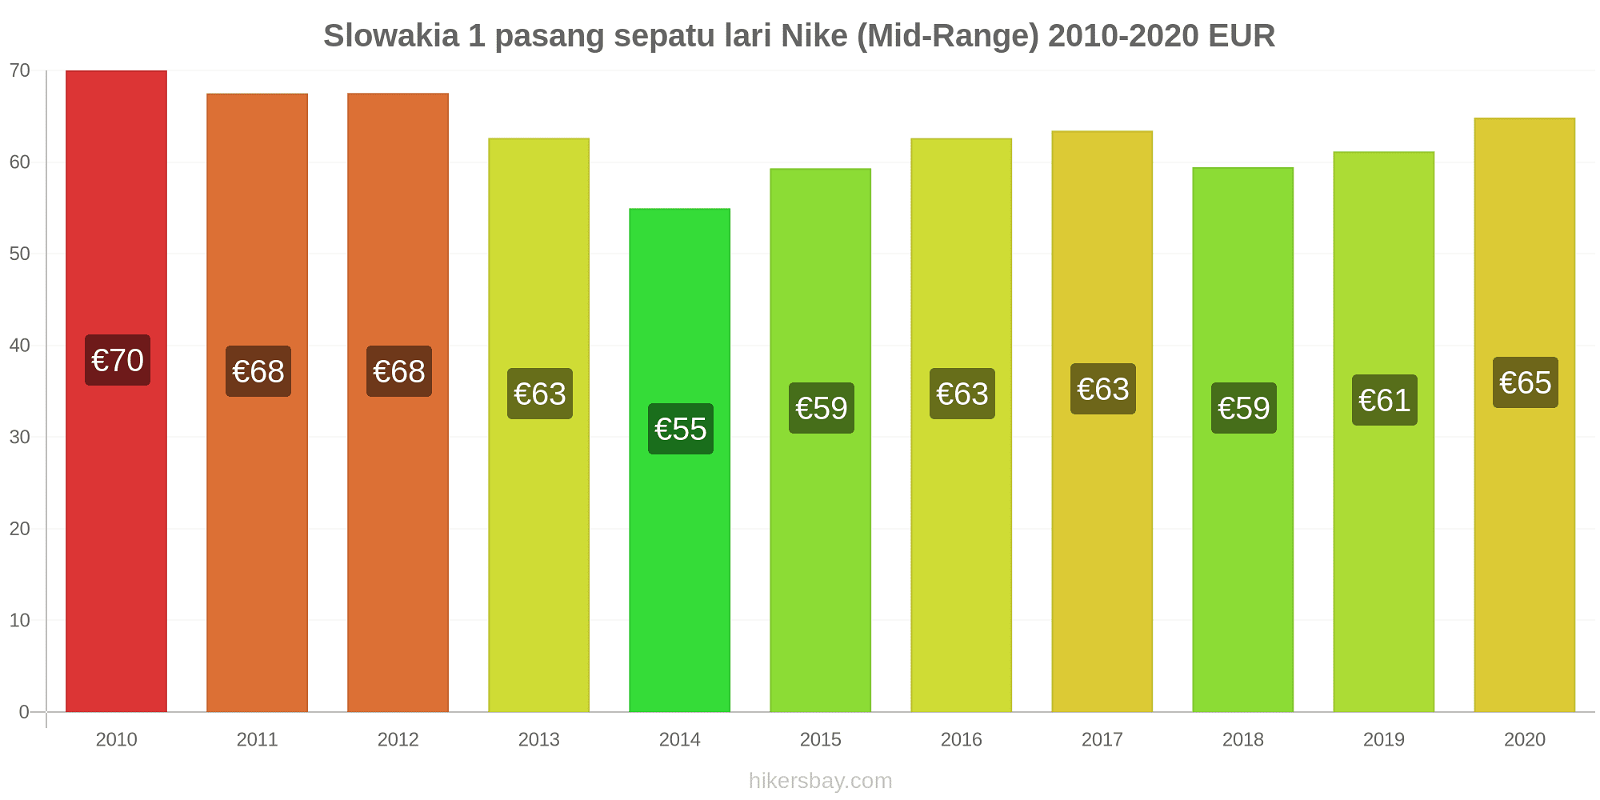 Slowakia perubahan harga 1 pasang sepatu lari Nike (Mid-Range) hikersbay.com